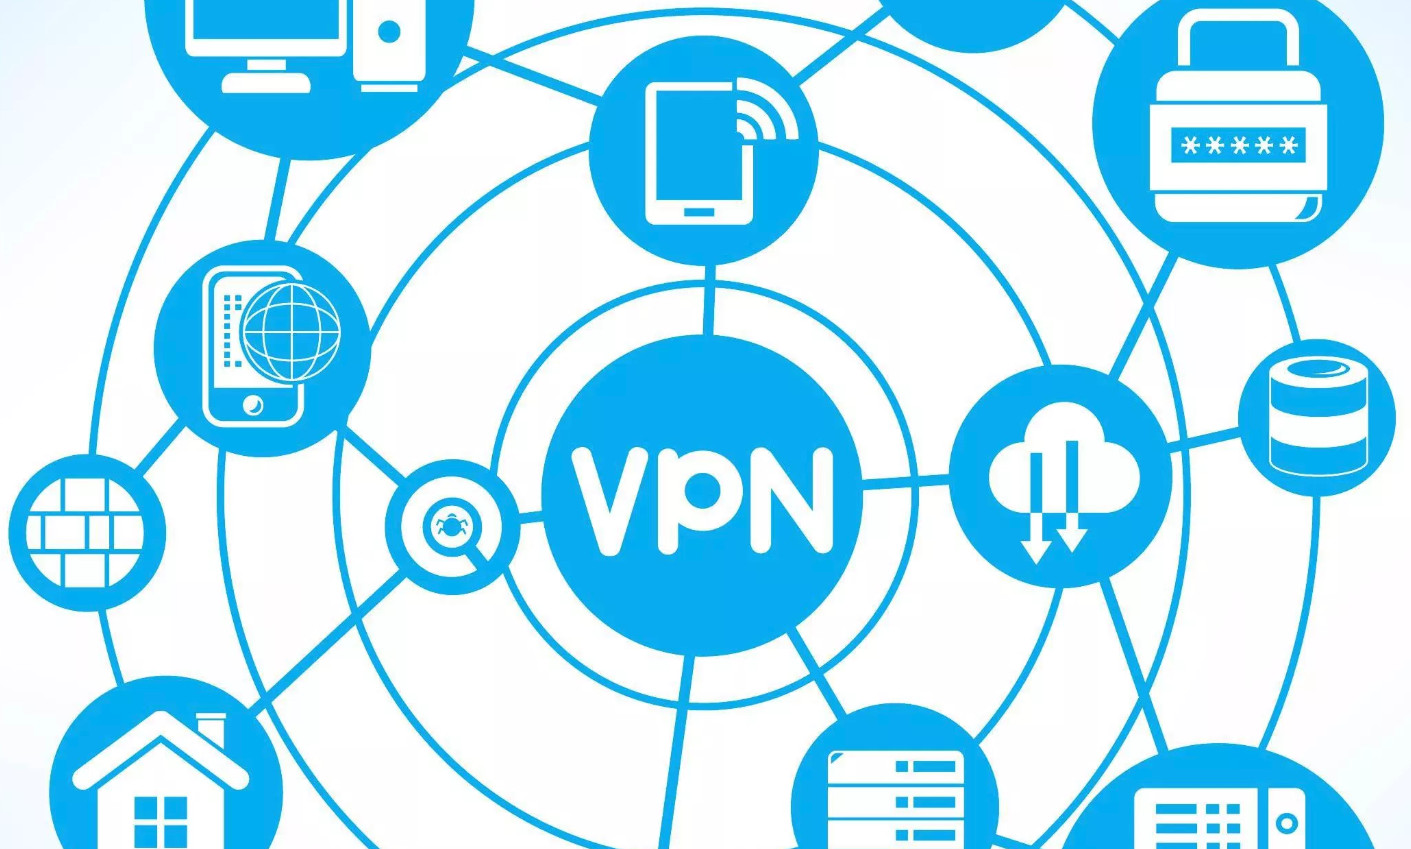 Red privada virtual (VPN)